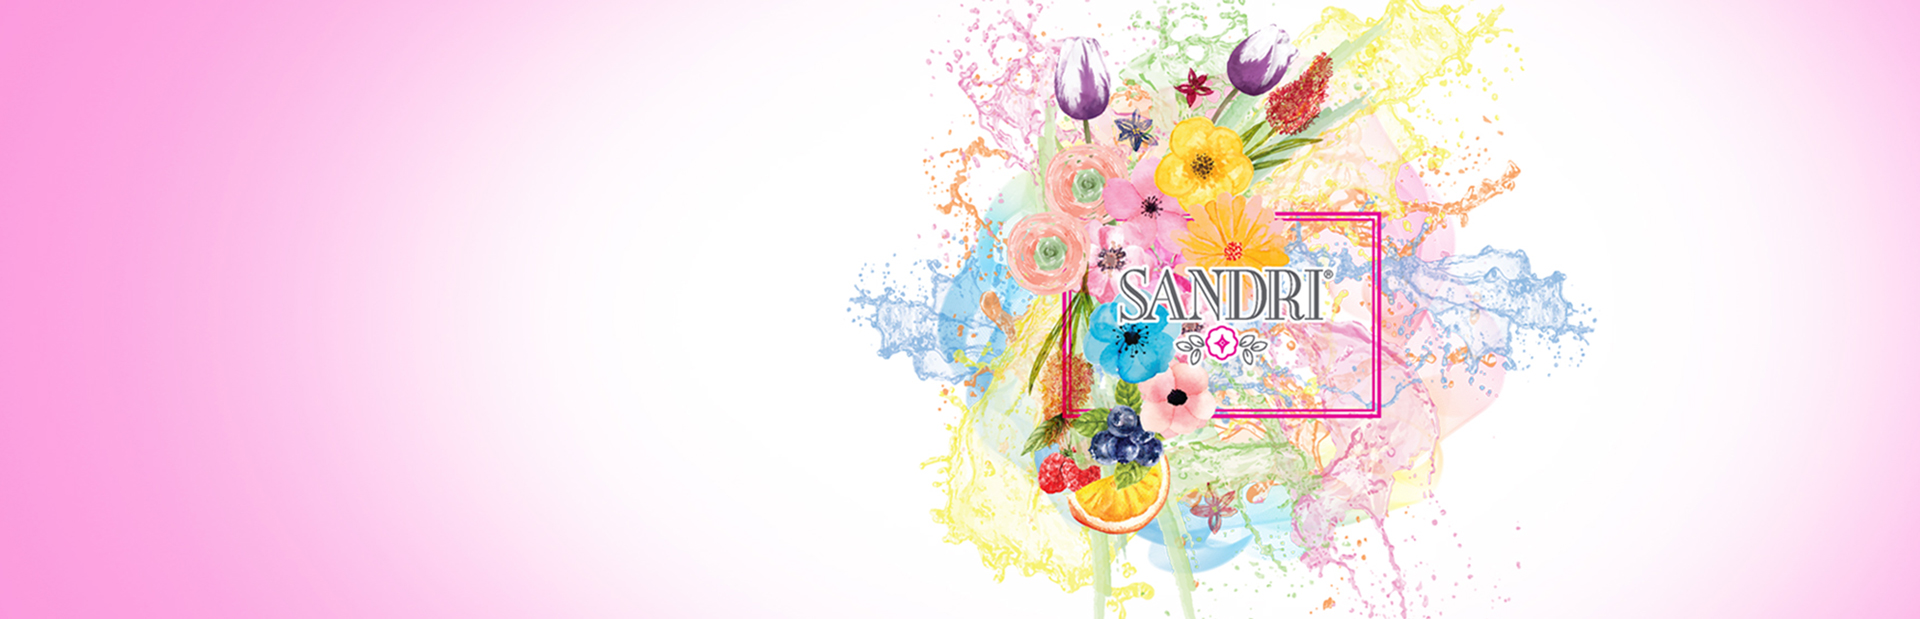 Sandri Group - produzione essenze profumate, candele, plastica profumata conto terzi